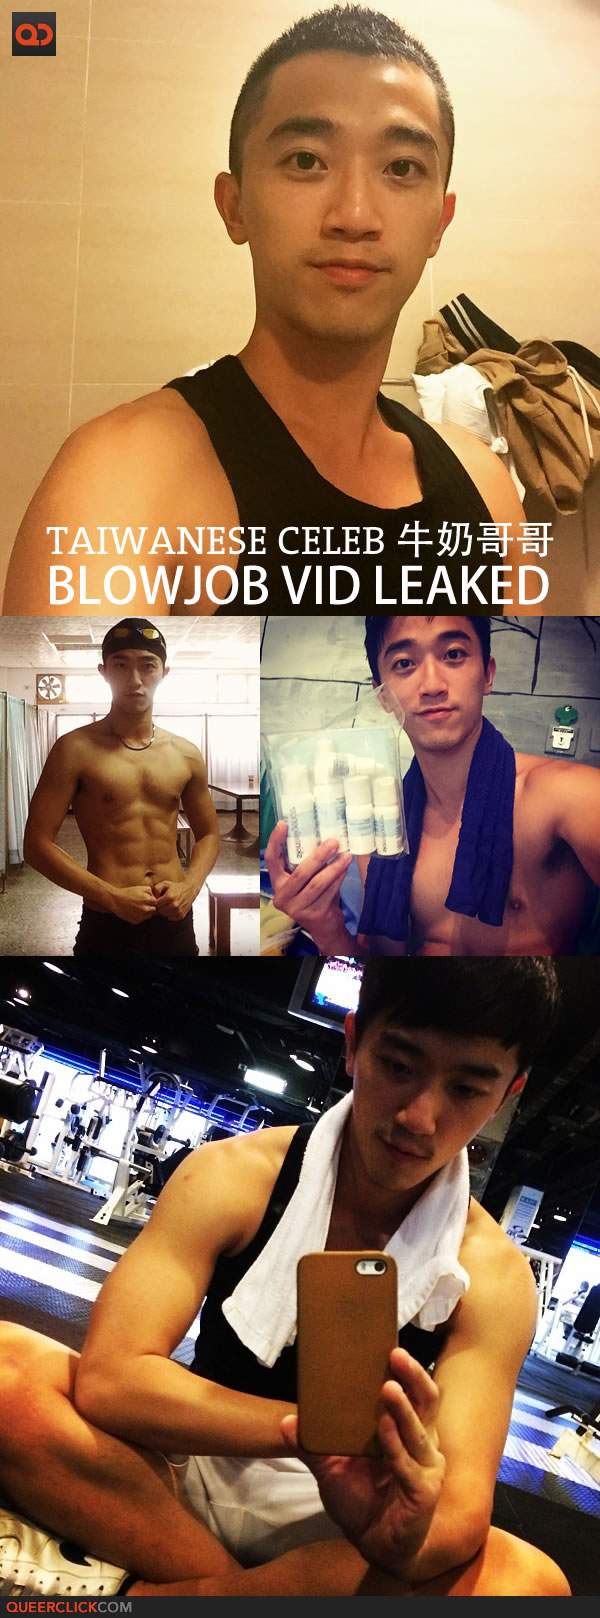 Taiwanese Celeb Milk Lin (牛奶哥哥) Blowjob Vid Leaked picture